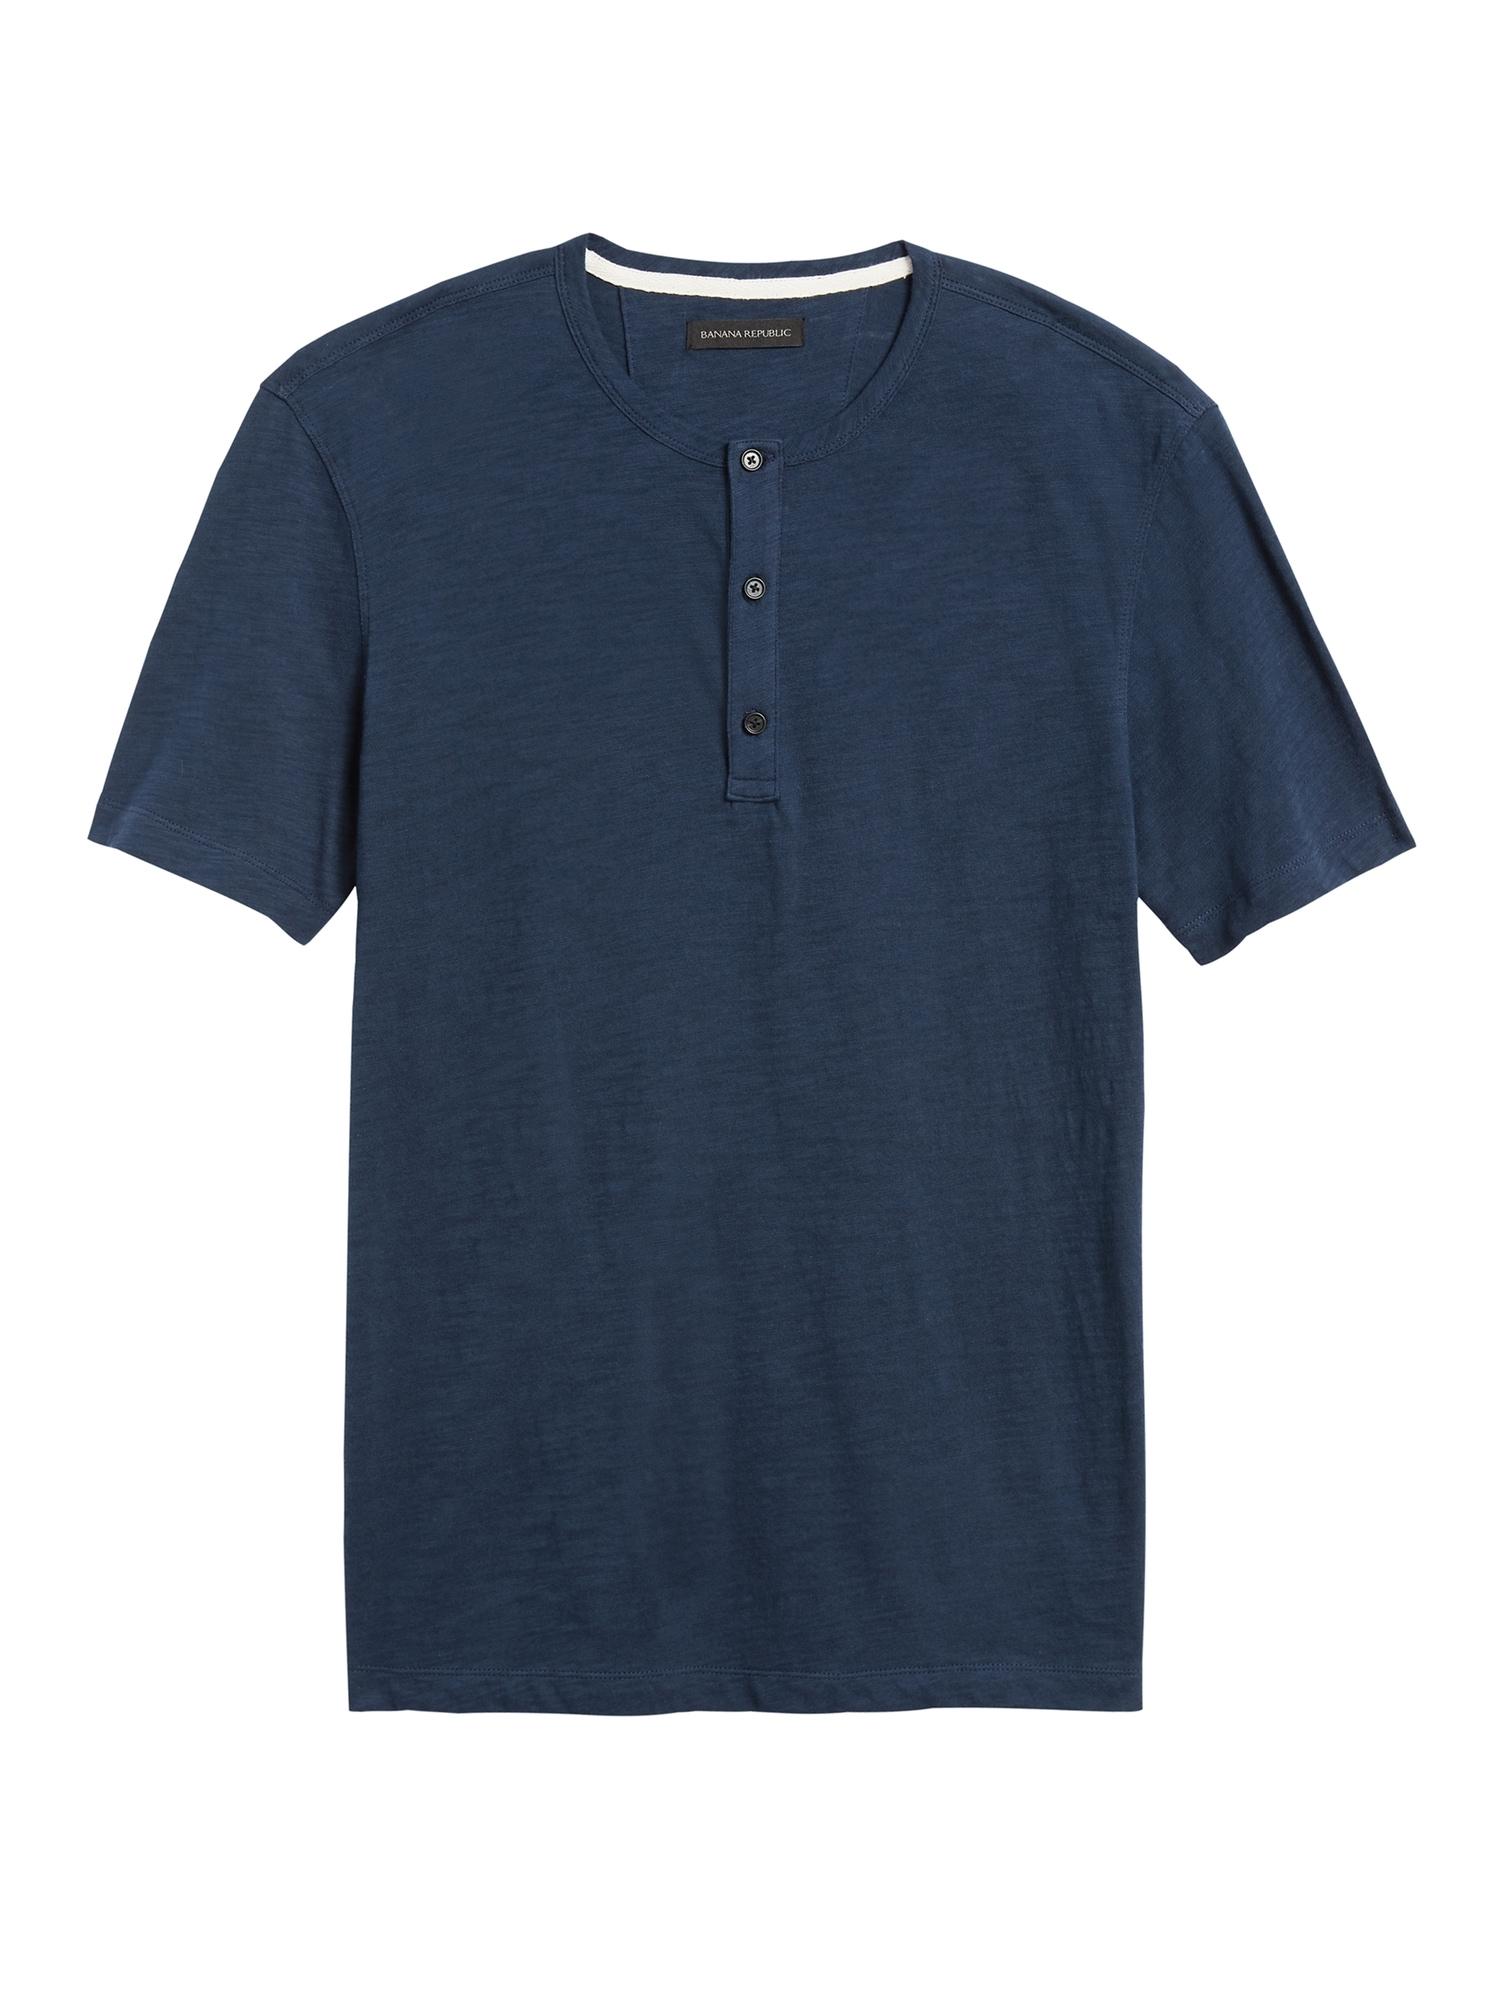 Banana Republic Vintage 100% Cotton Henley T-shirt in Blue for Men - Lyst